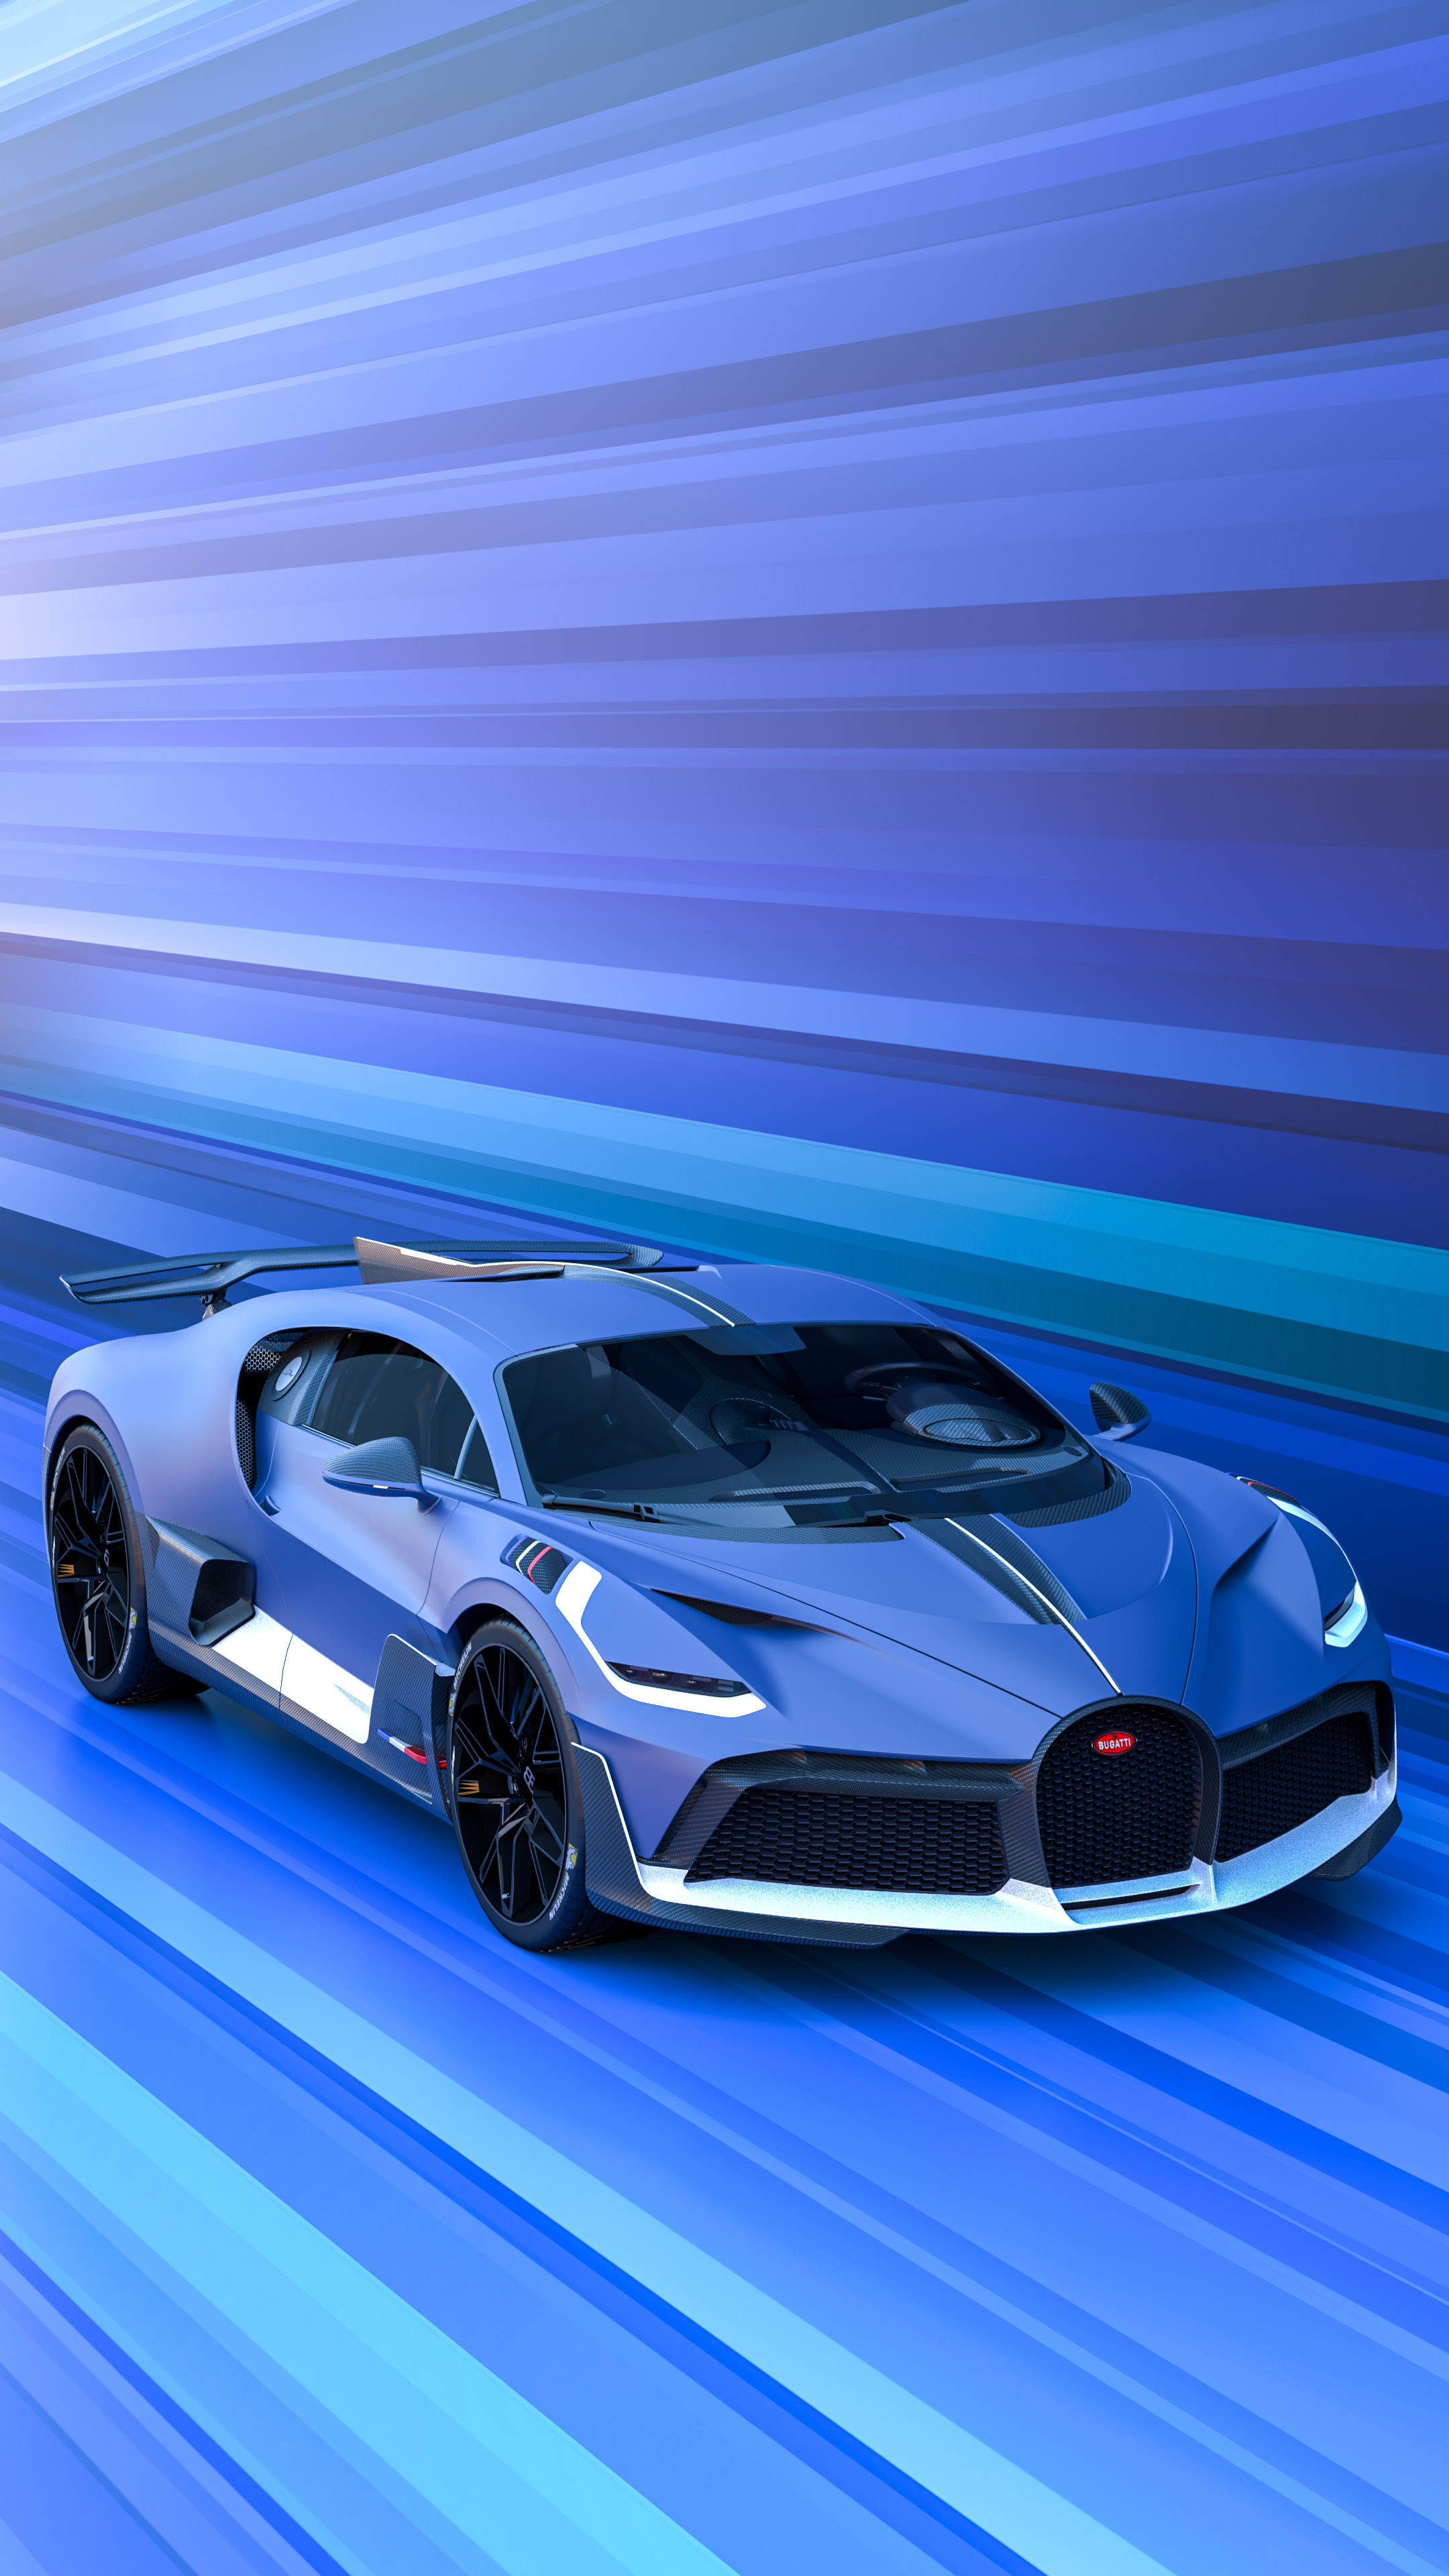 car wallpaper for phone of latest Bugatti DIVO supercar in 4K Ultra HD resolution